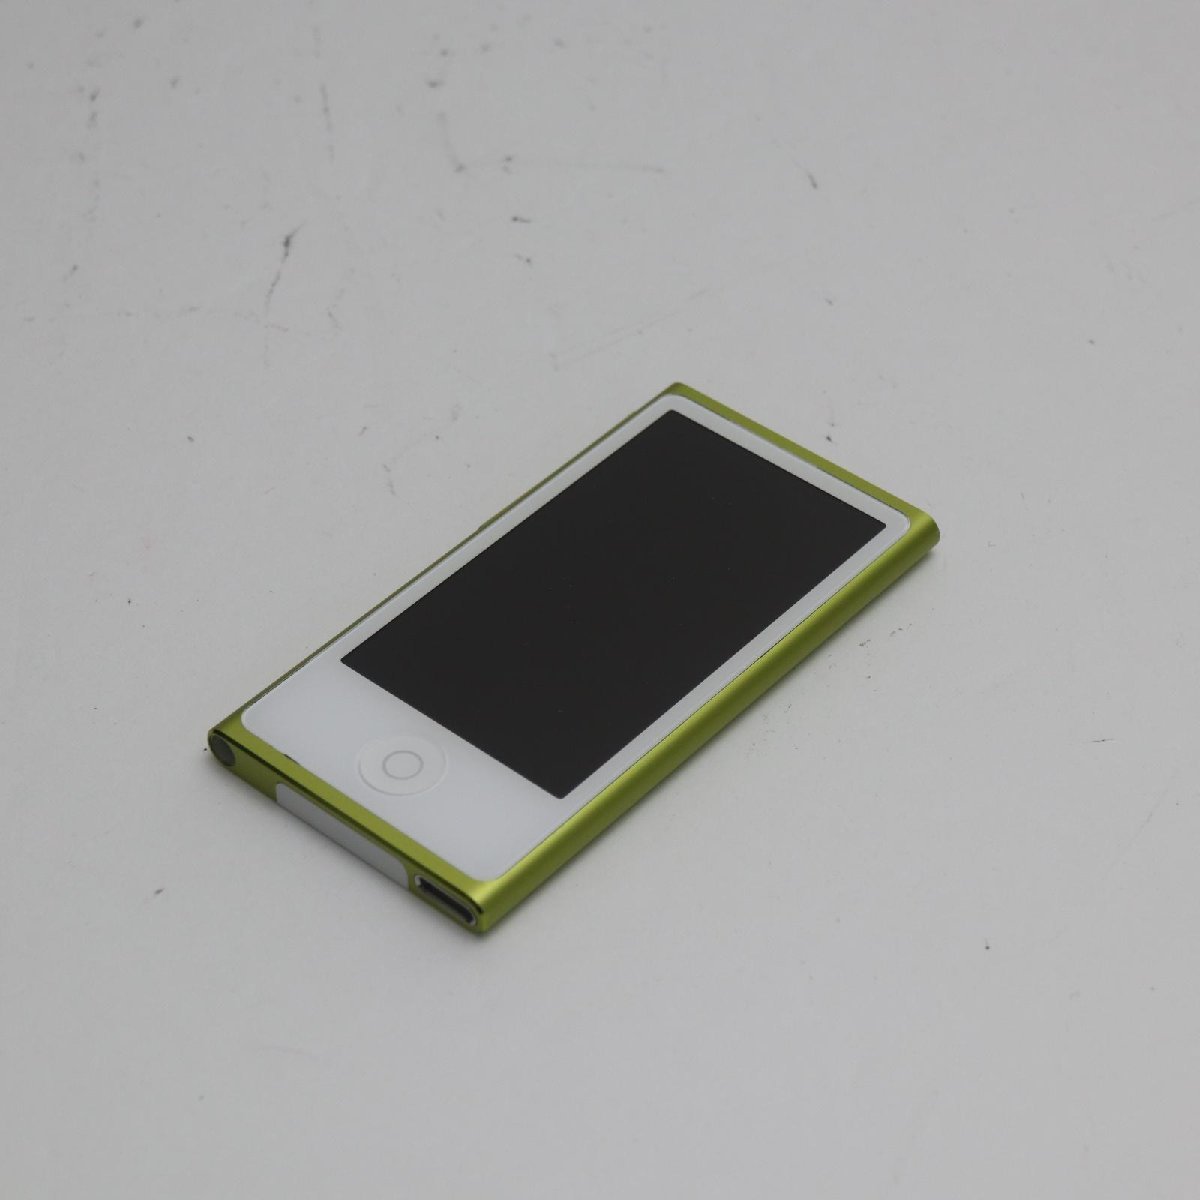 新品同様iPod nano 第7世代16GB イエロー即日発送MD476J/A MD476J/A 